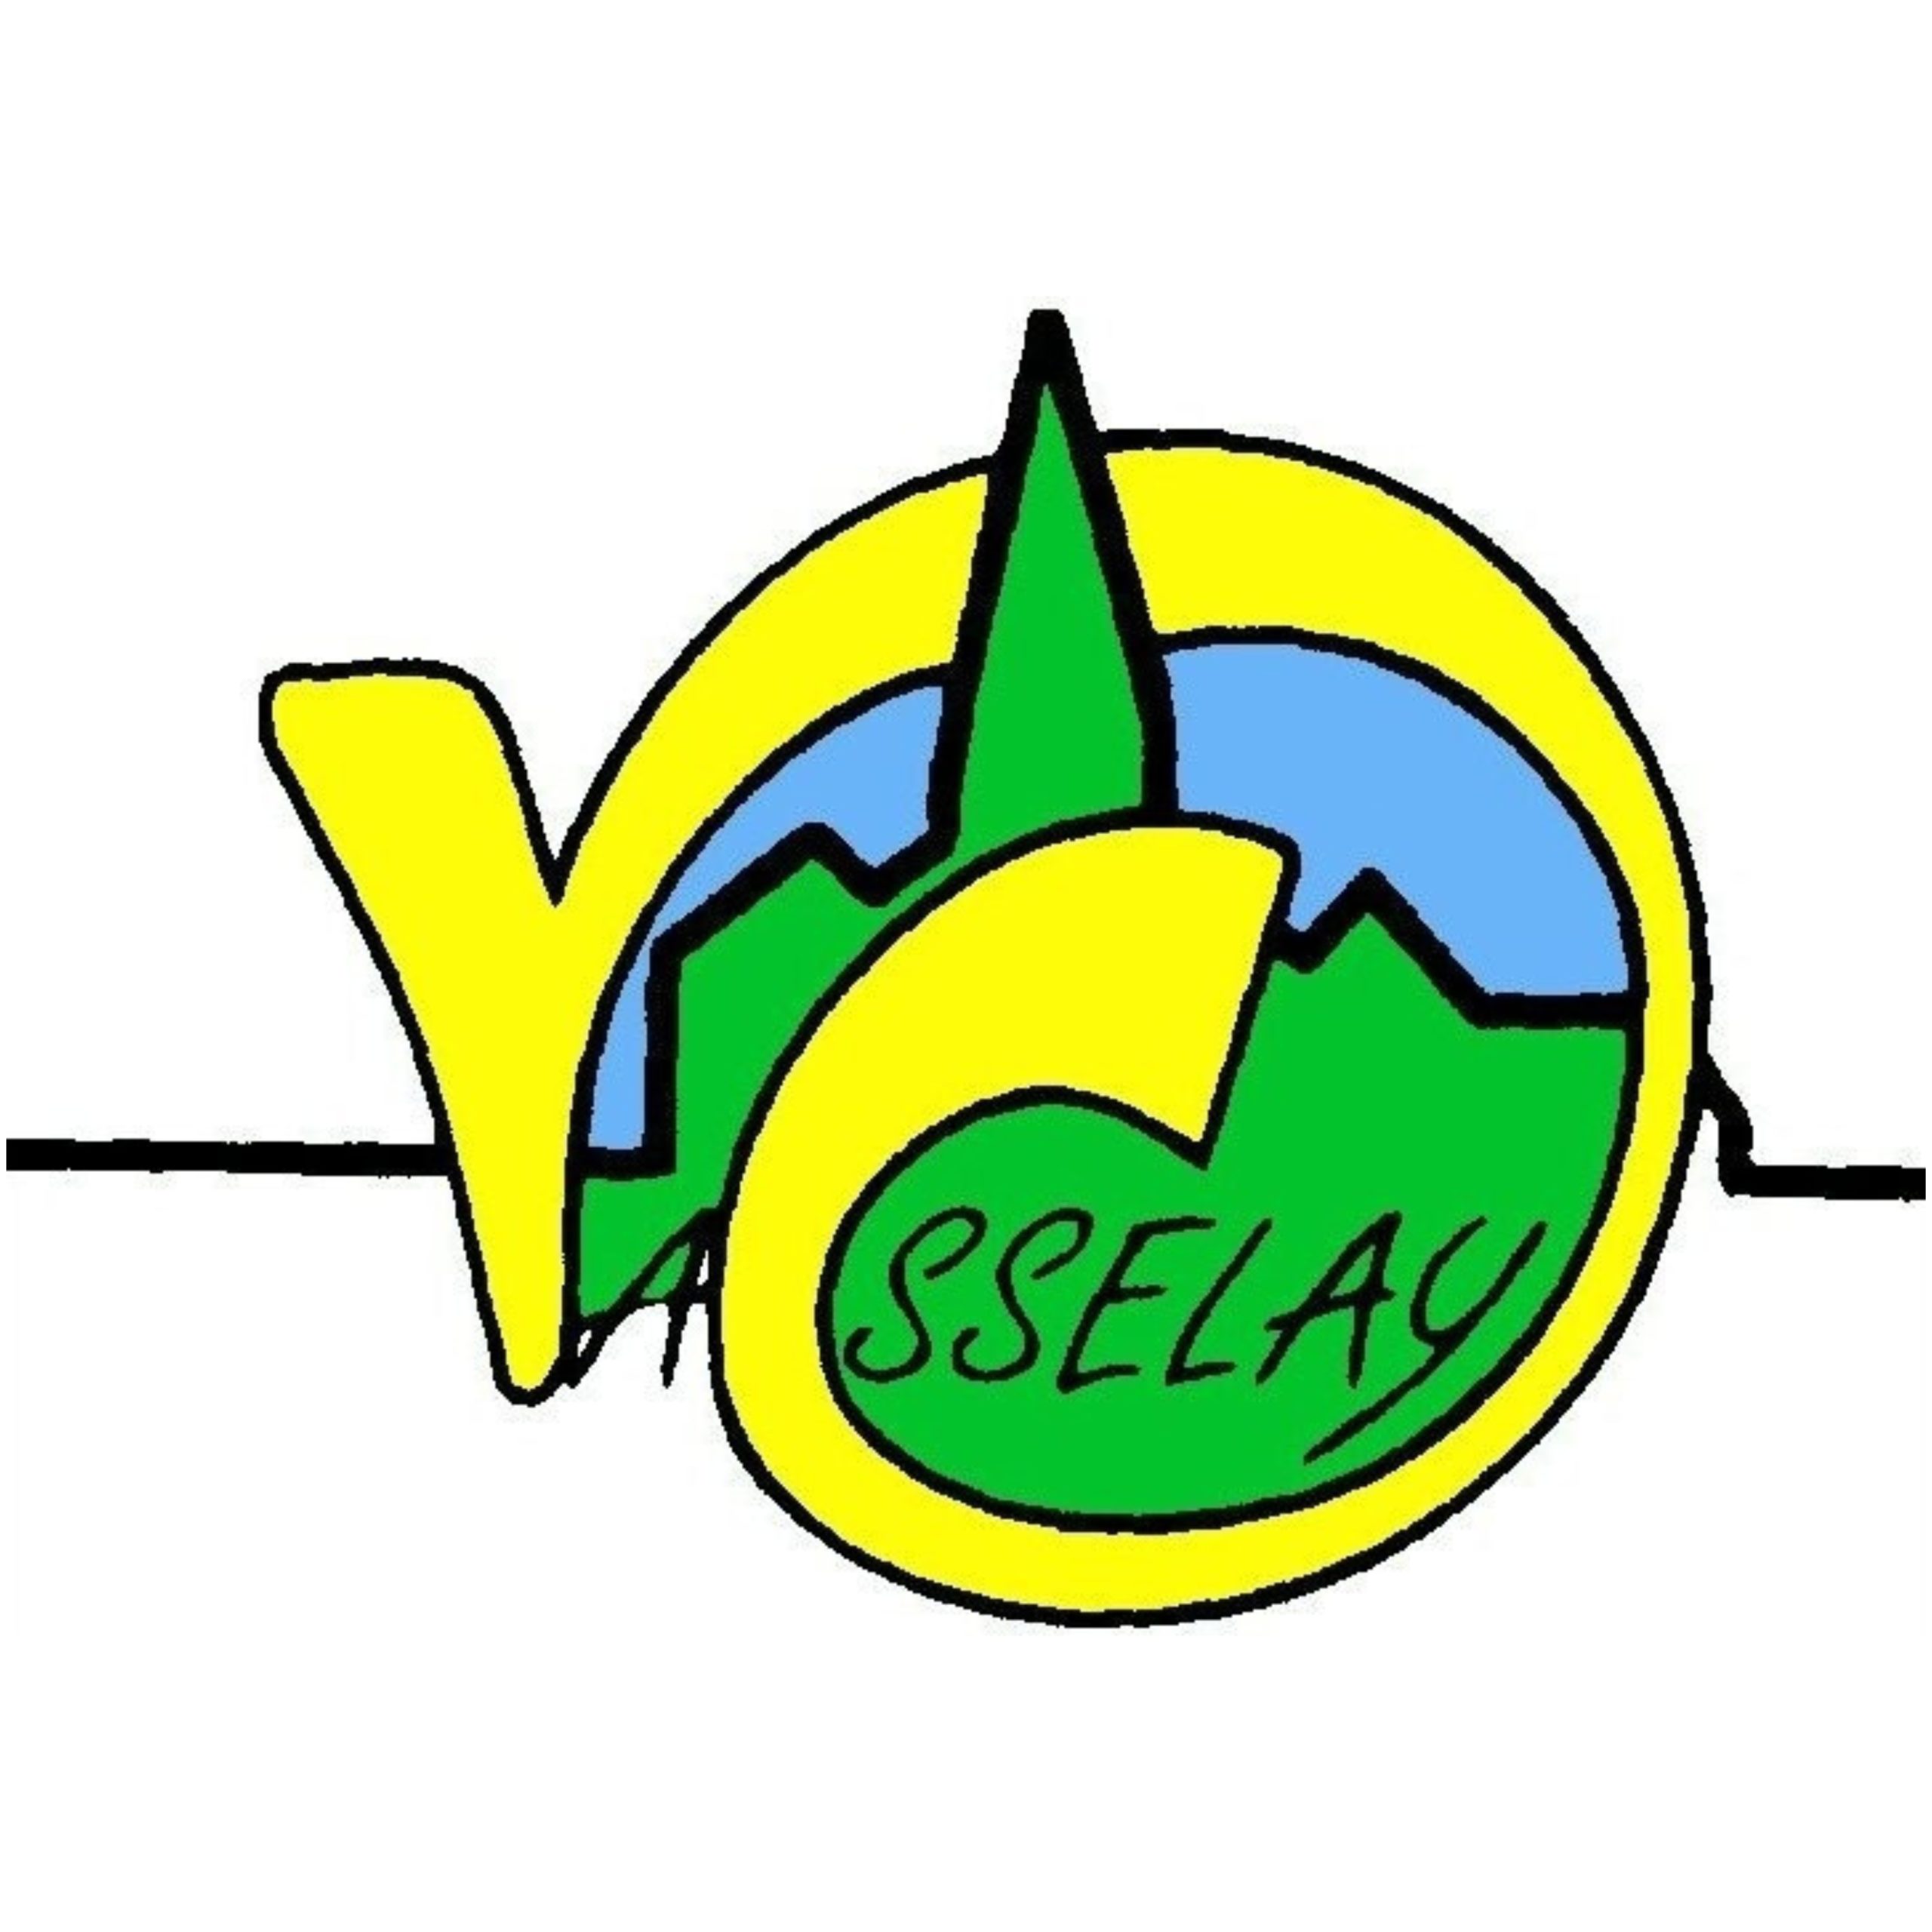 Vasselay